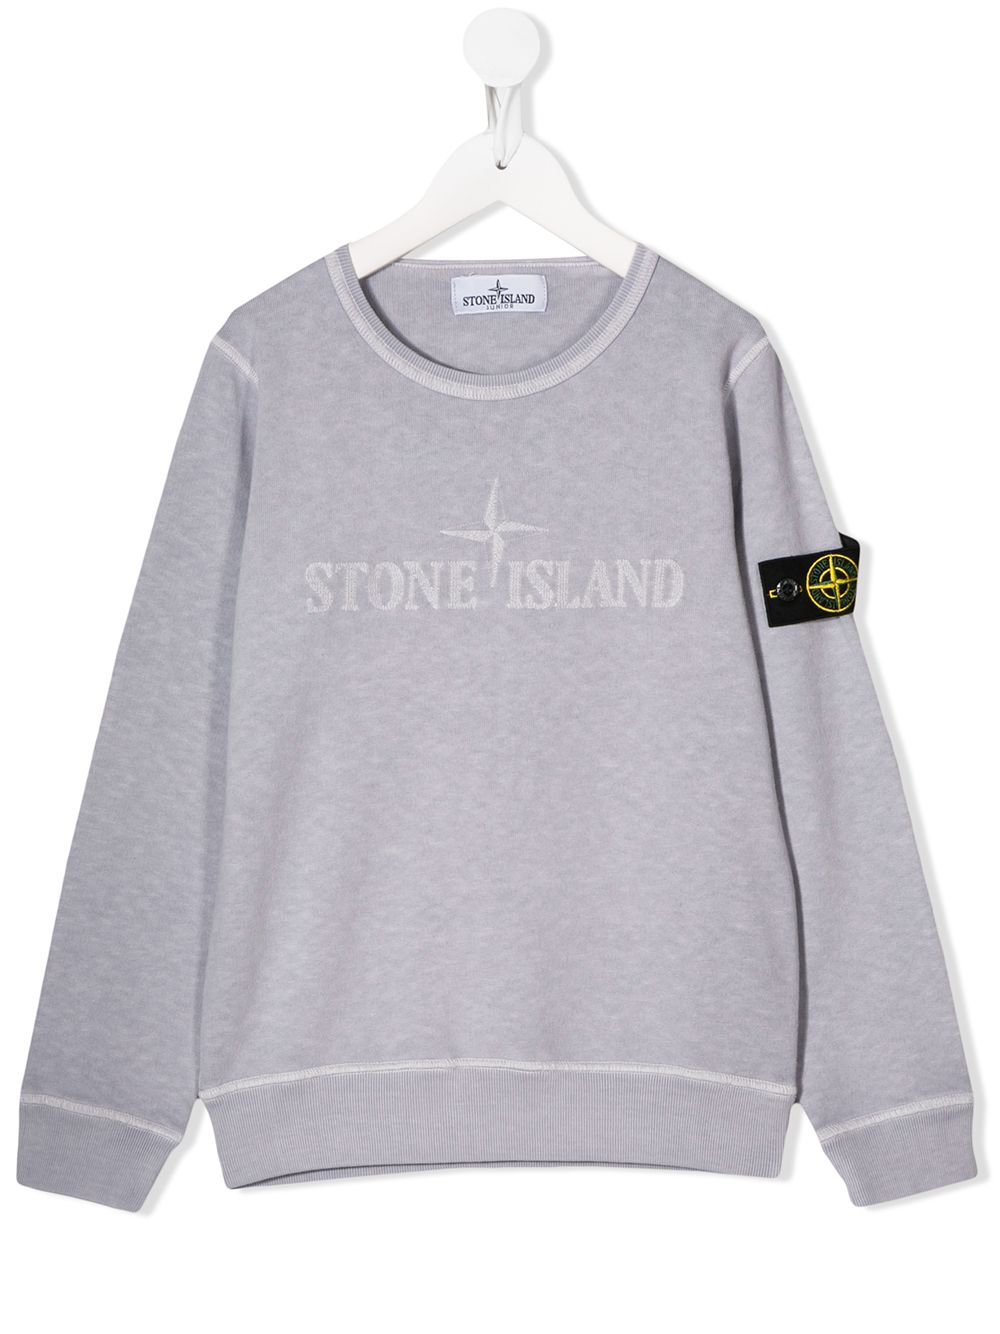 stone island embroidered logo sweatshirt